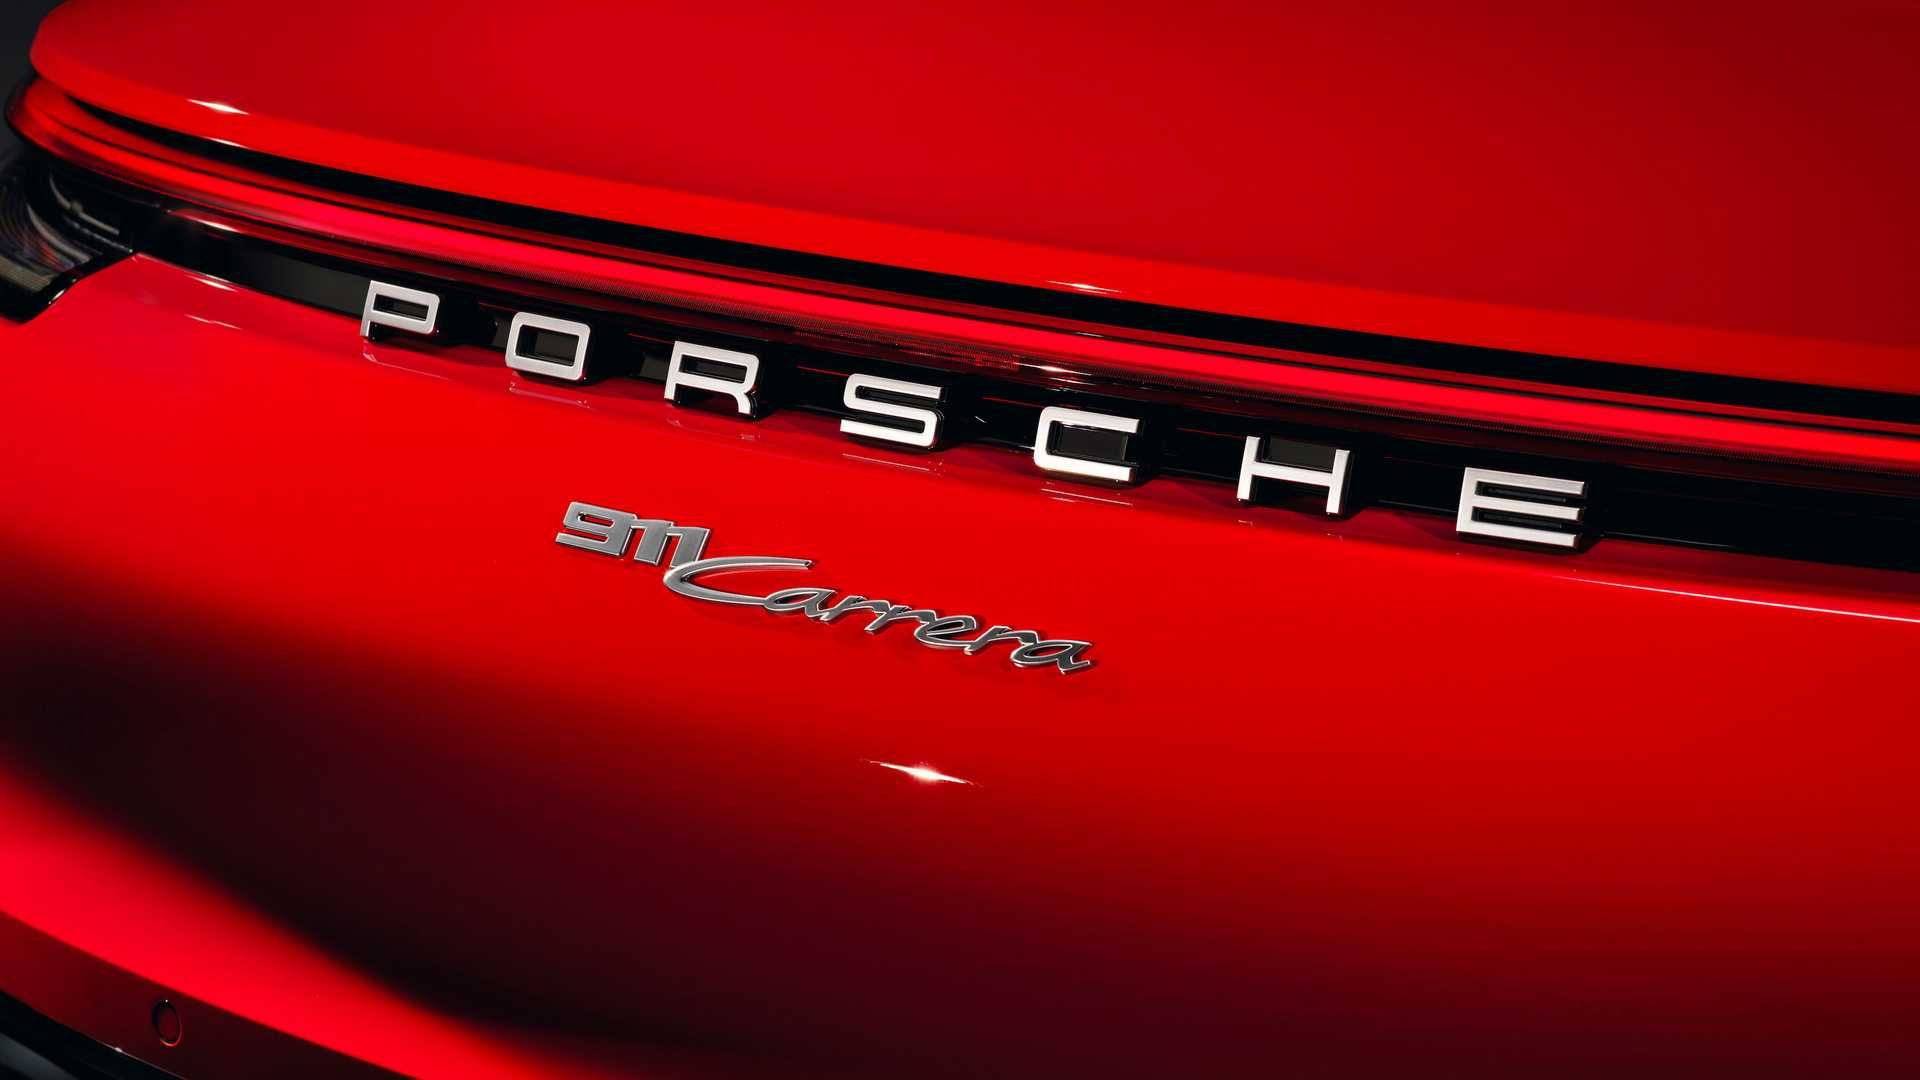 2020 Porsche 911 Carrera / پورشه 911 کاررا